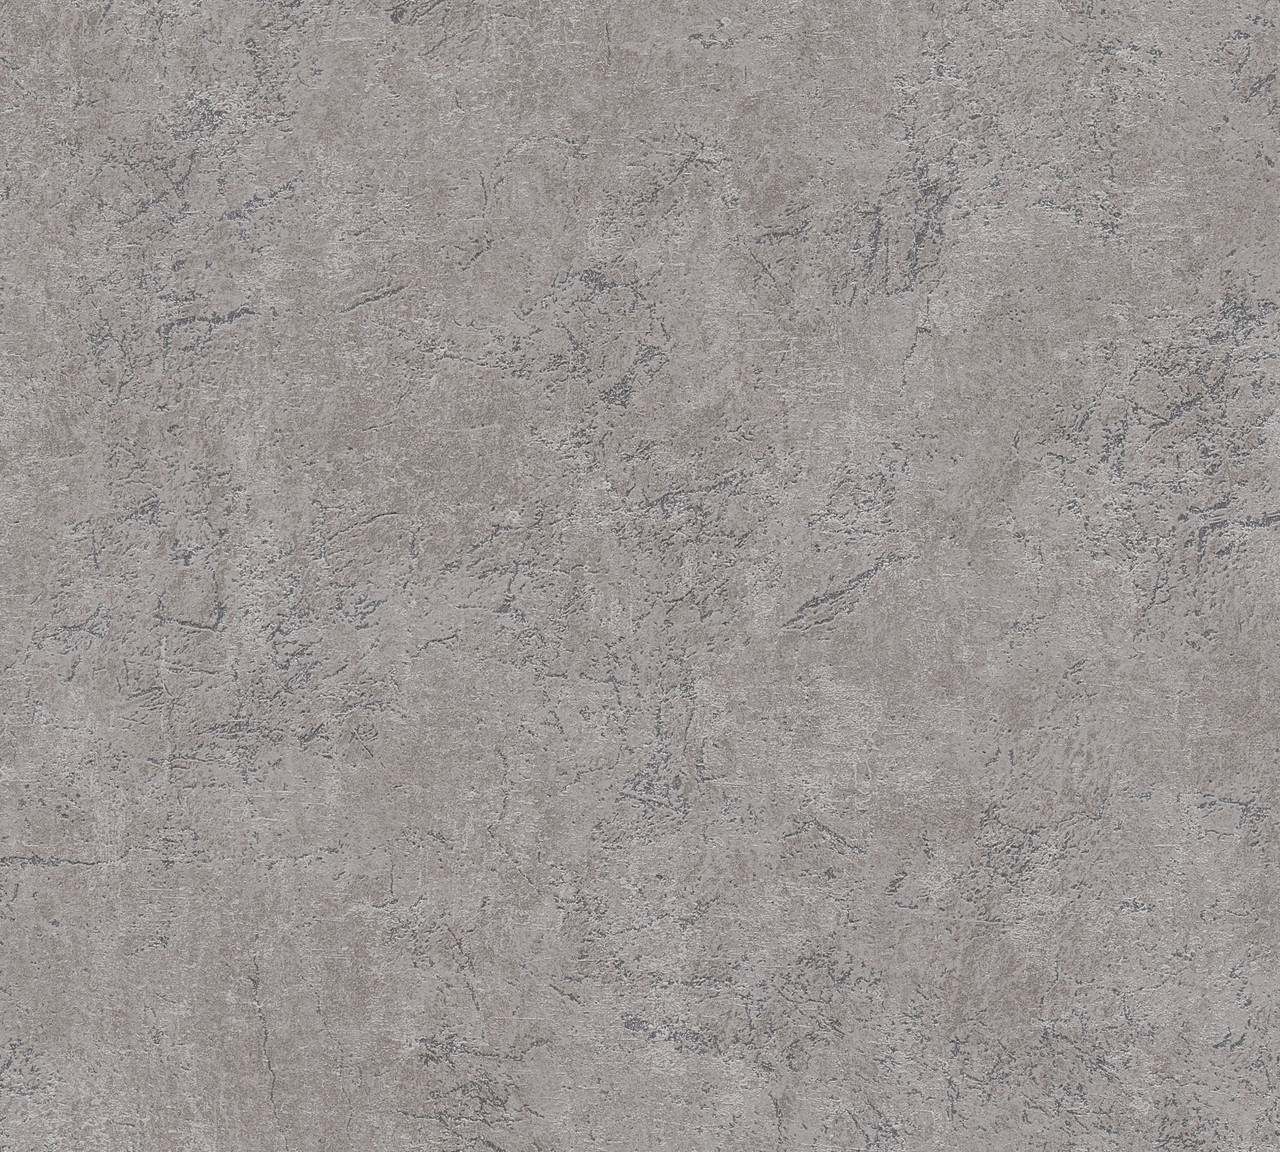 Textured Dark Grey Non Woven Wallpaper As Creation Whitewashed Concrete